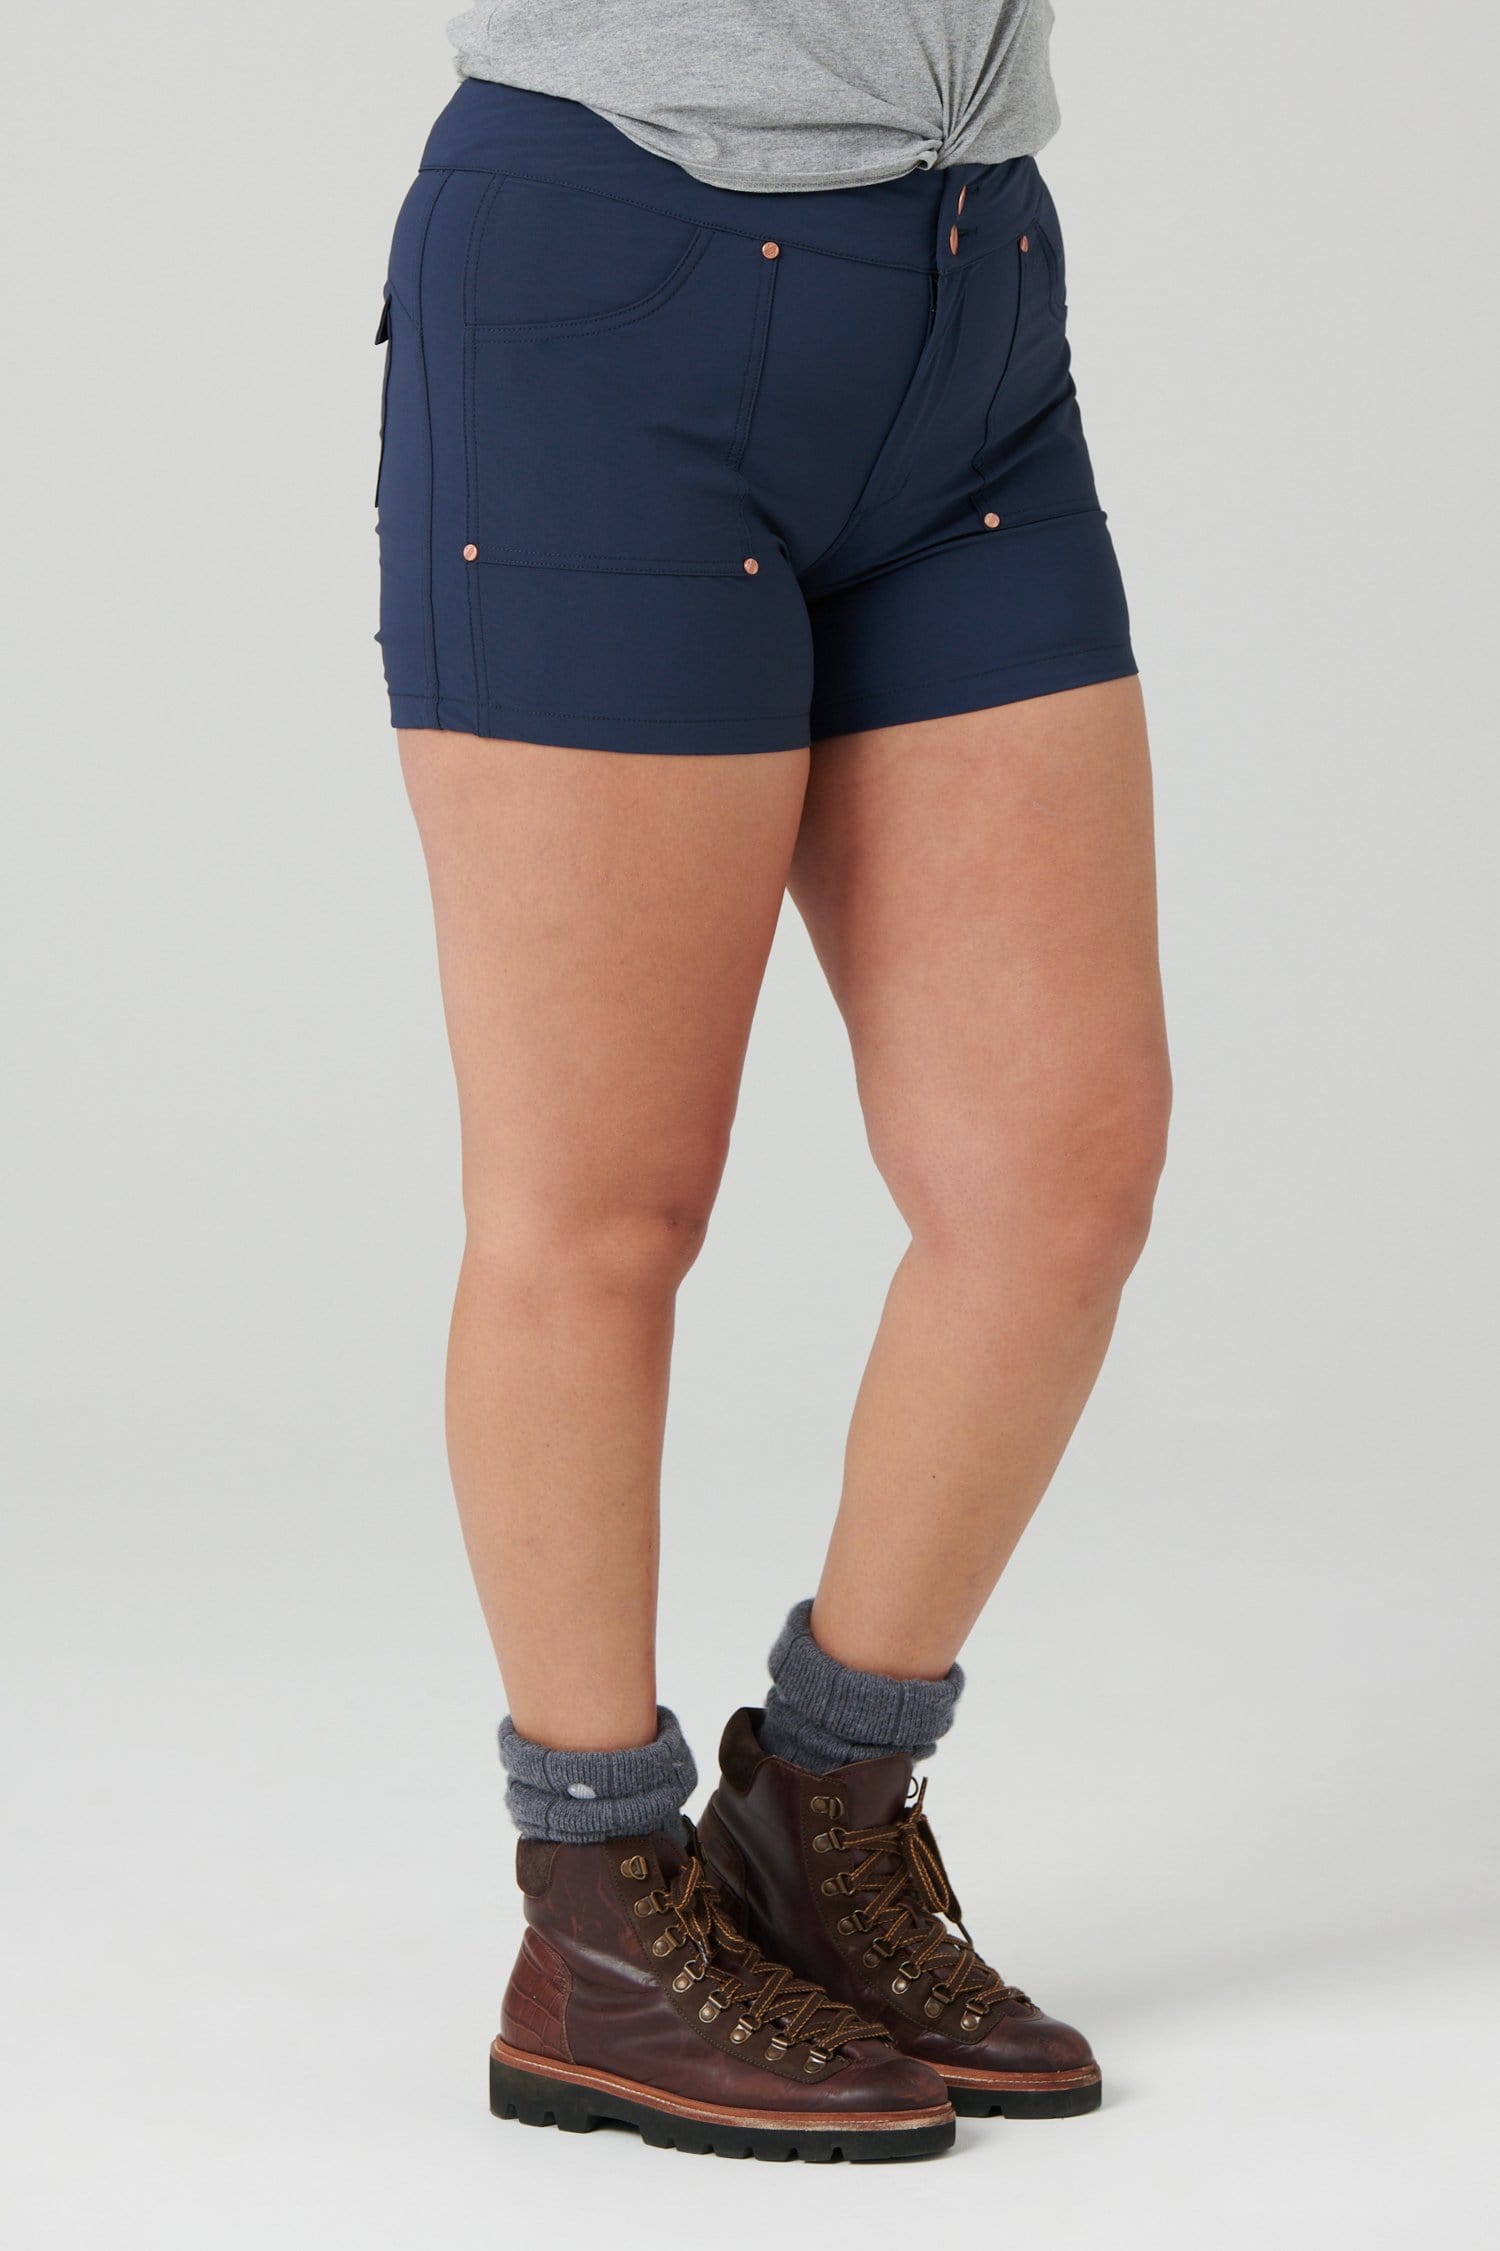 ACAI Outdoorwear - Not sure if we should be wearing Trek Shorts or